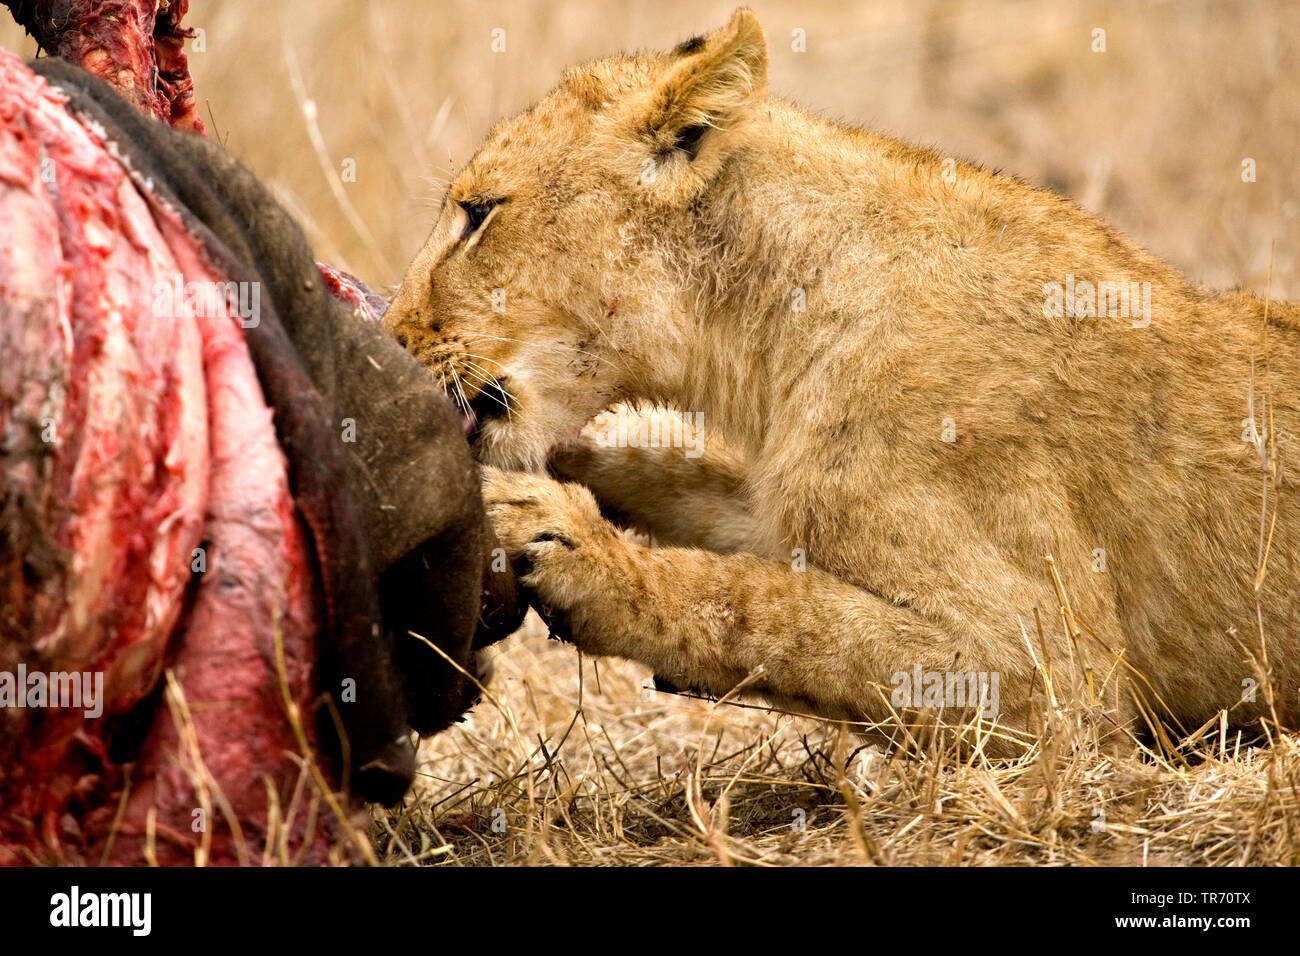 lion (Panthera leo), eating the pray, South Africa, Krueger National Park Stock Photo